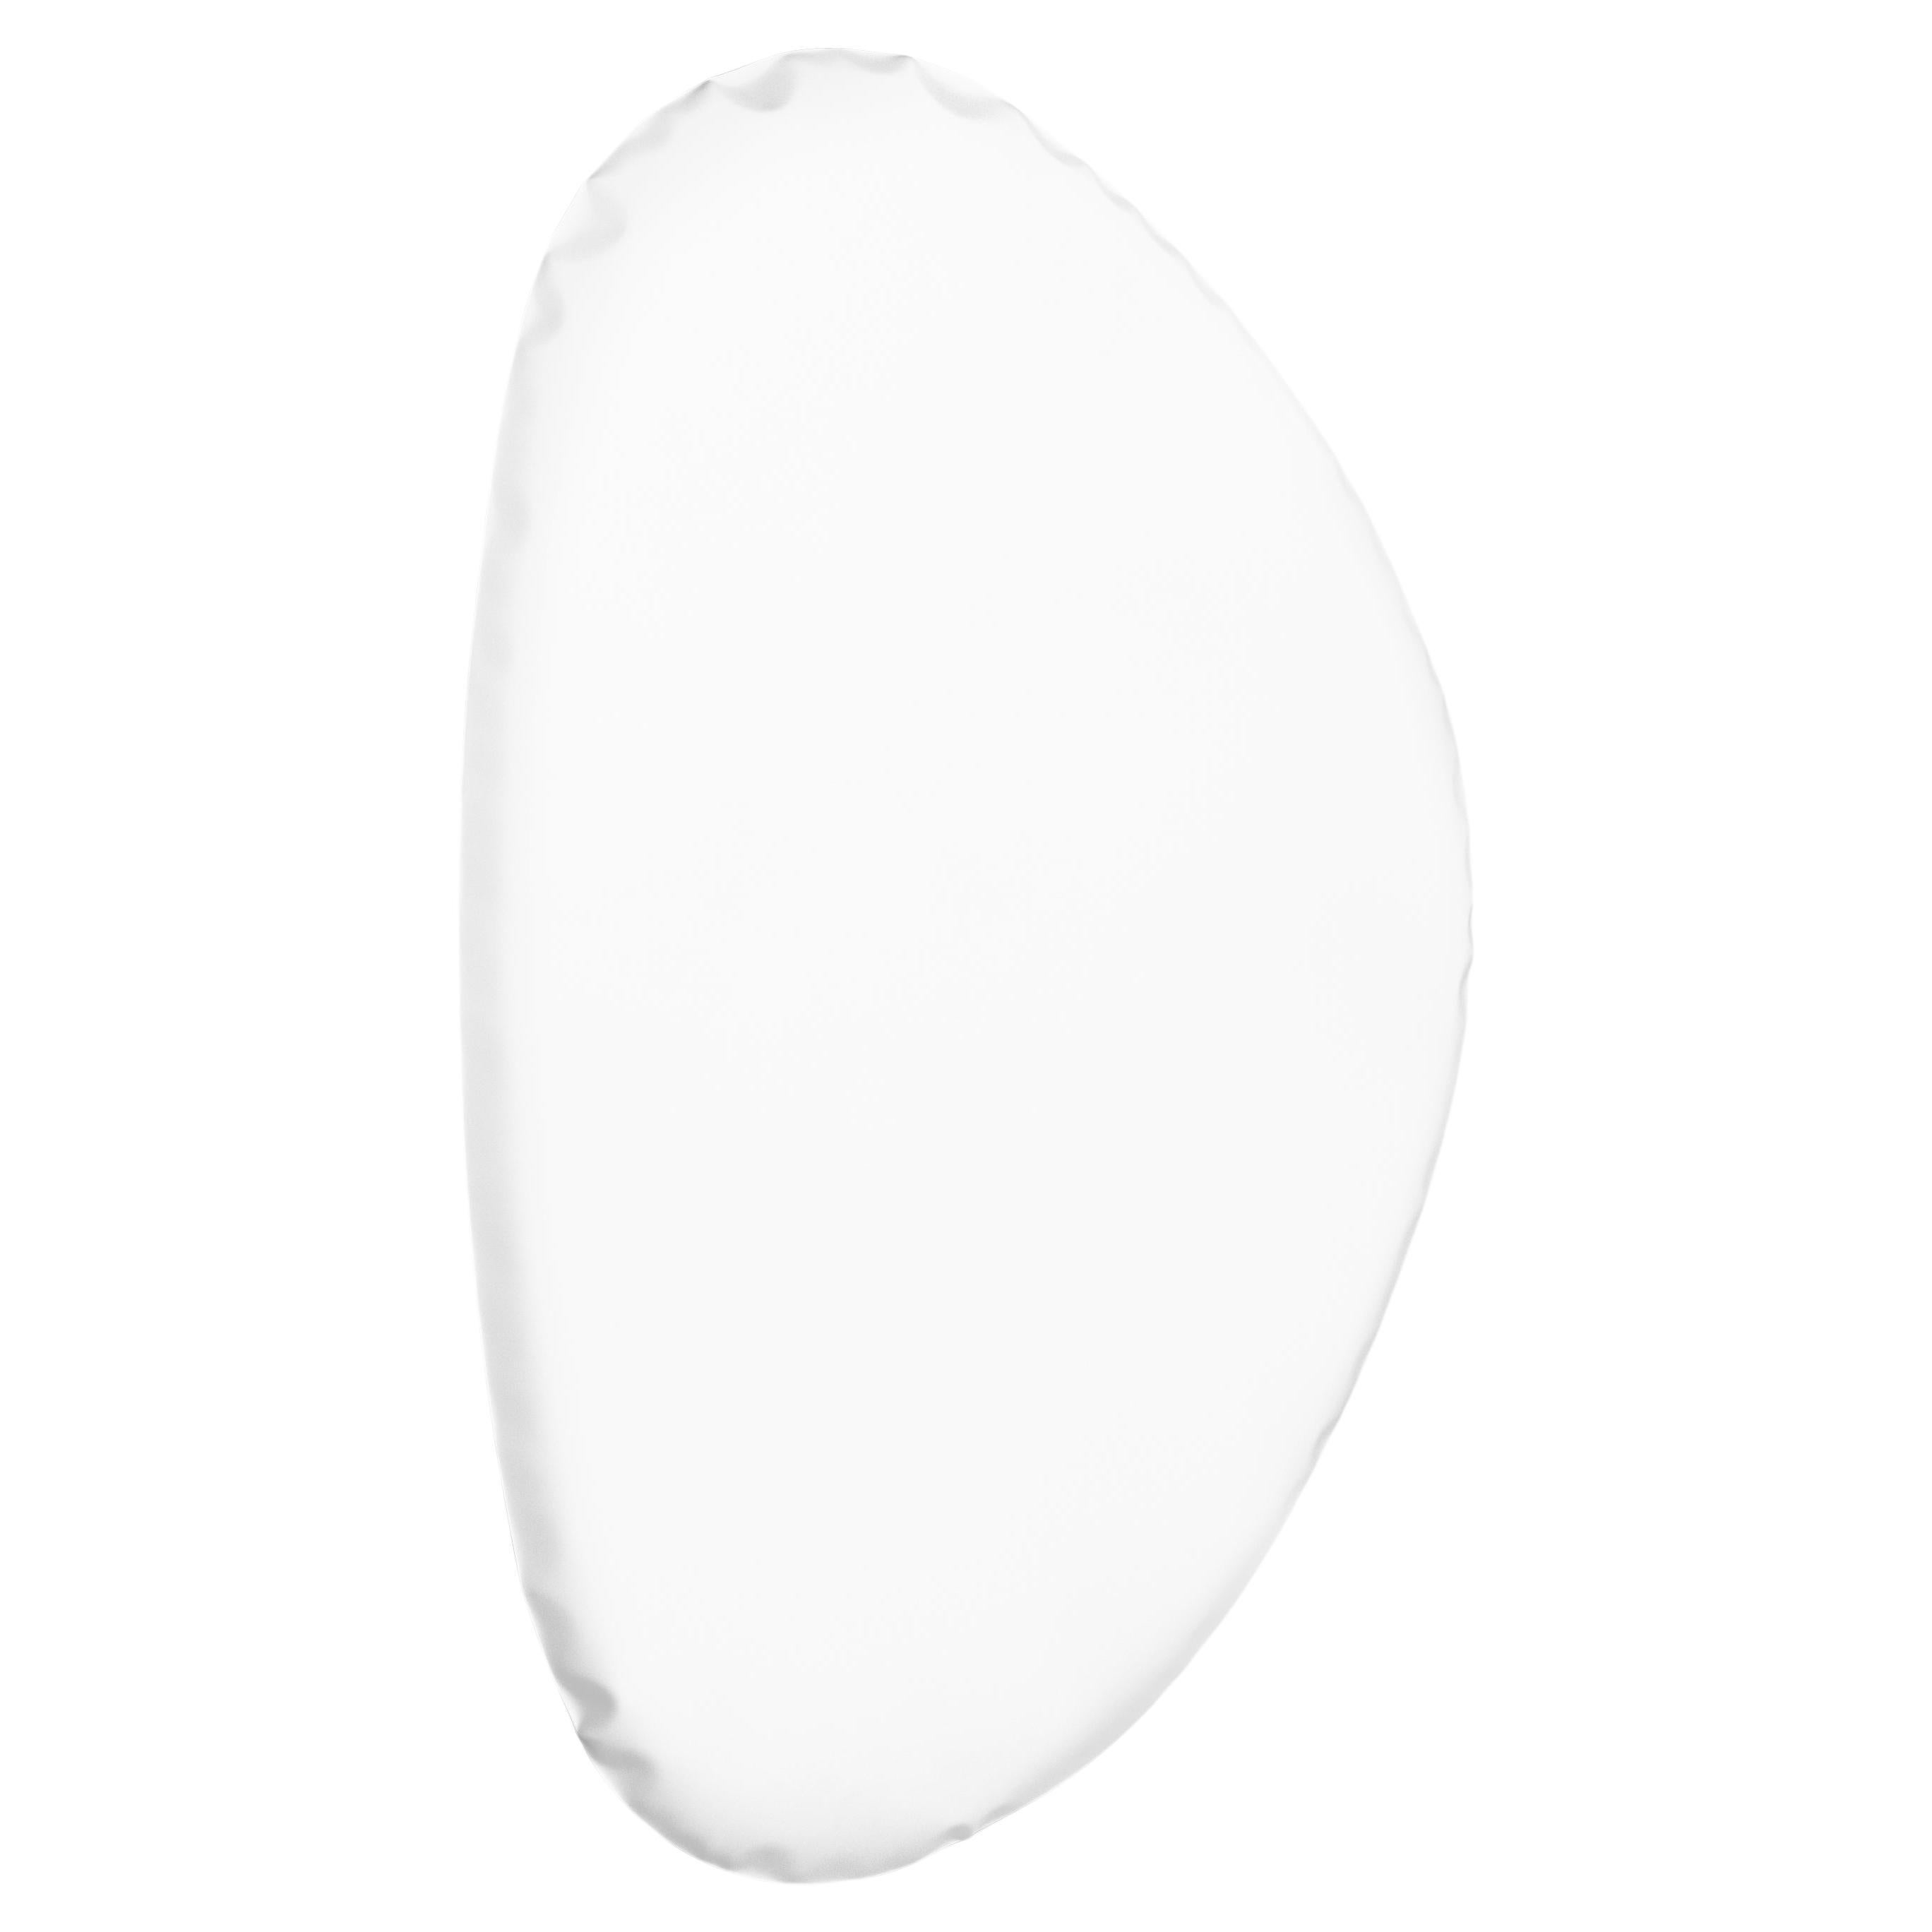 Cotton Candy White Matt Tafla O4 Mirror by Zieta